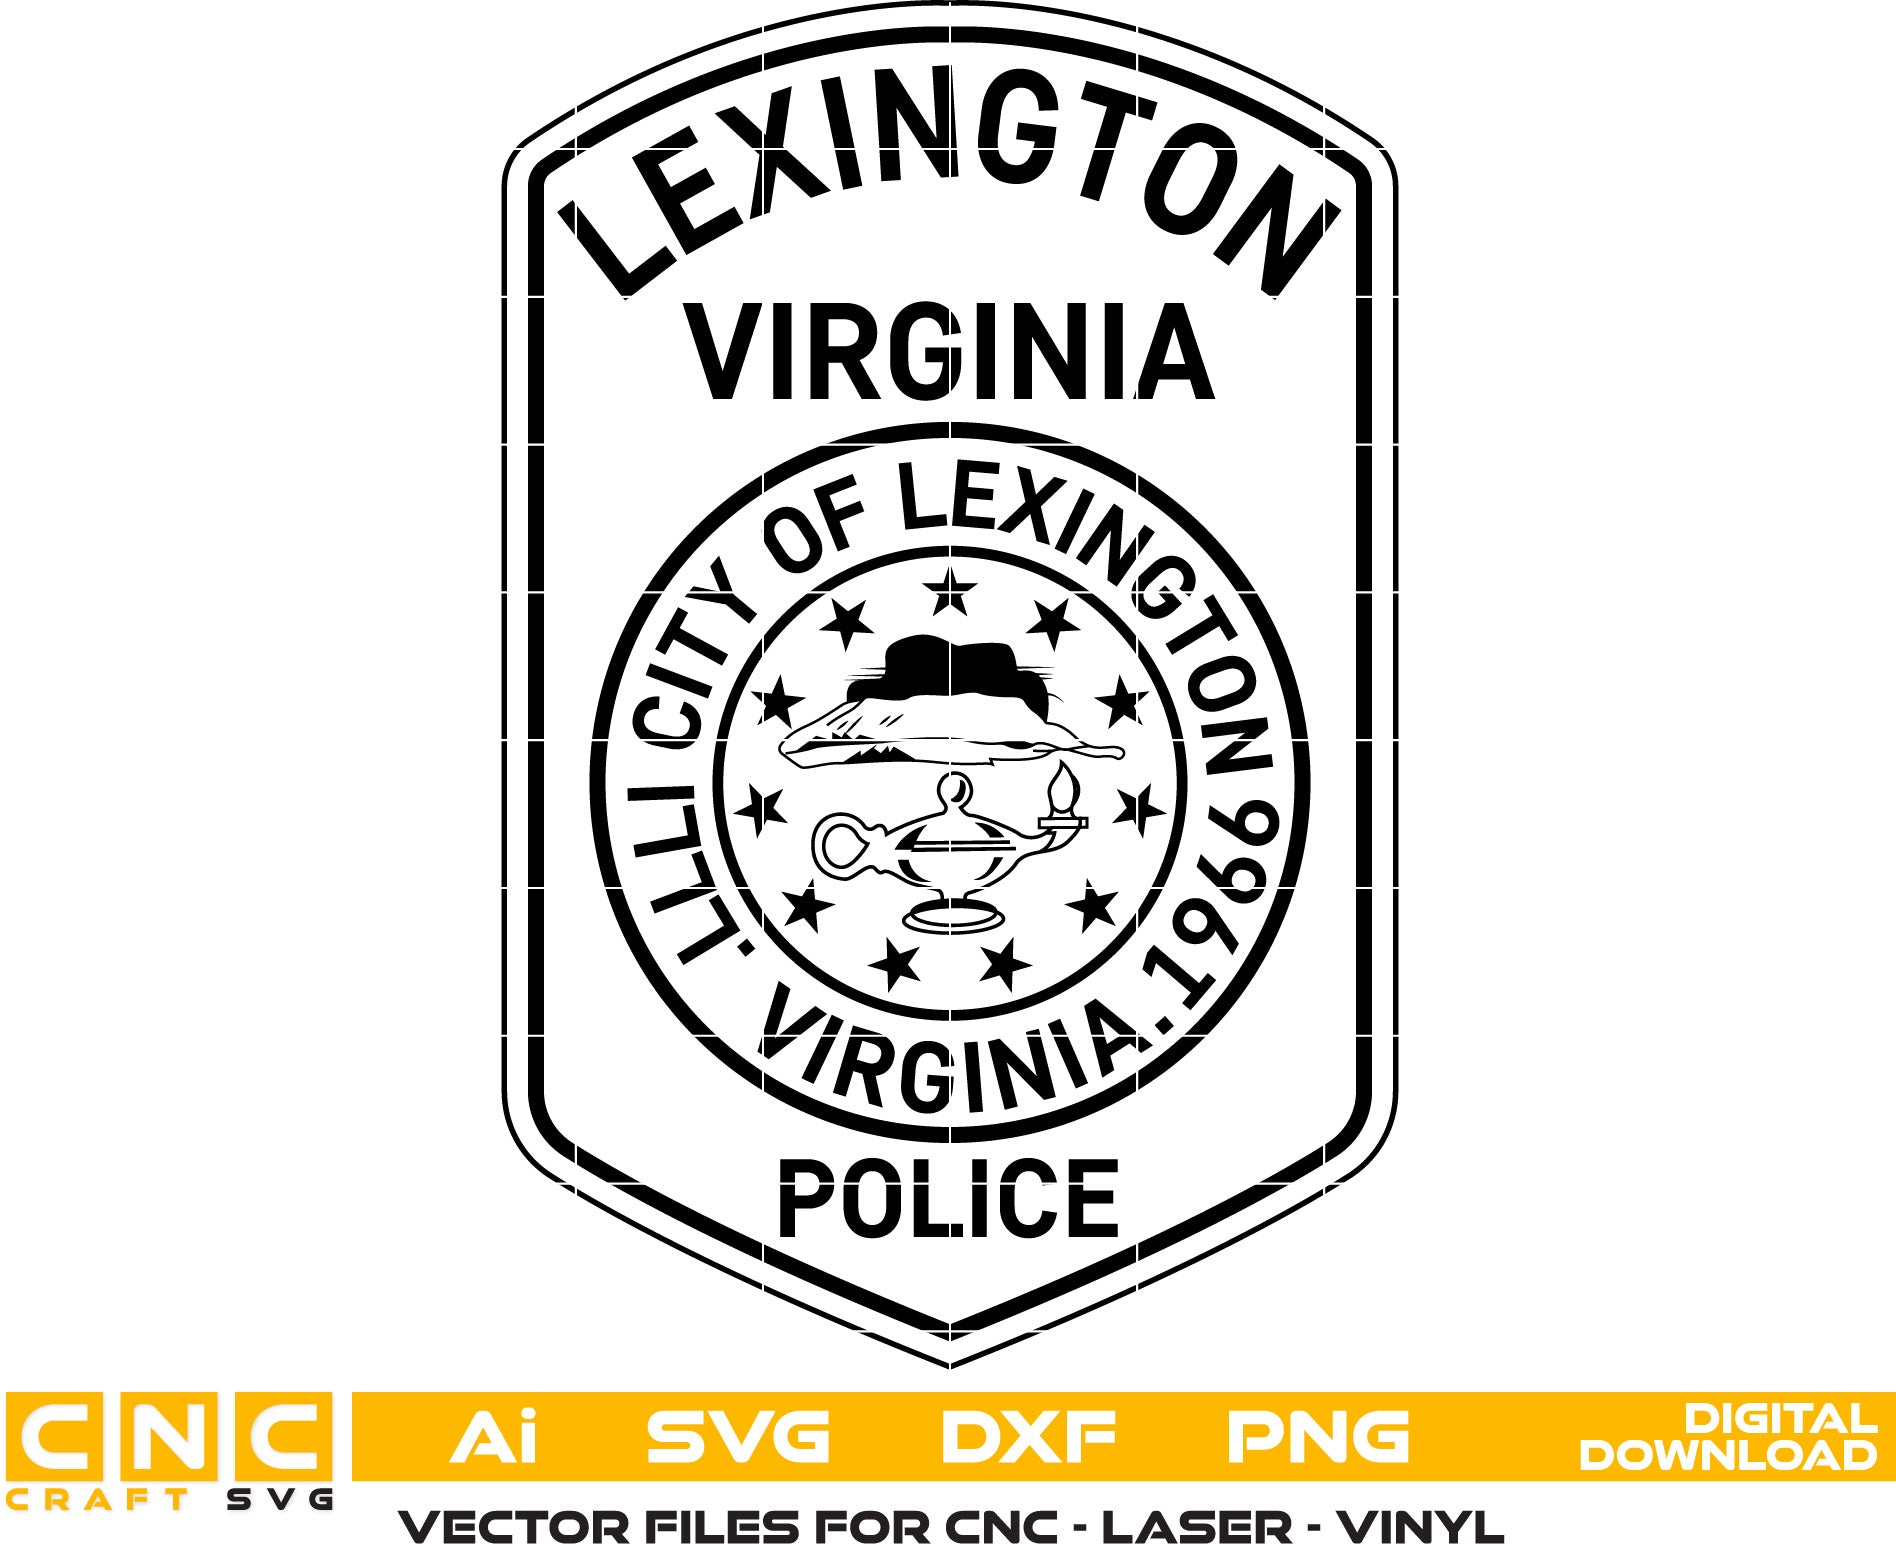 Virginia Lexington Police Badge for Laser Engraving, Woodworking,Printing, CNC Router, Cricut, Ezecad etc.